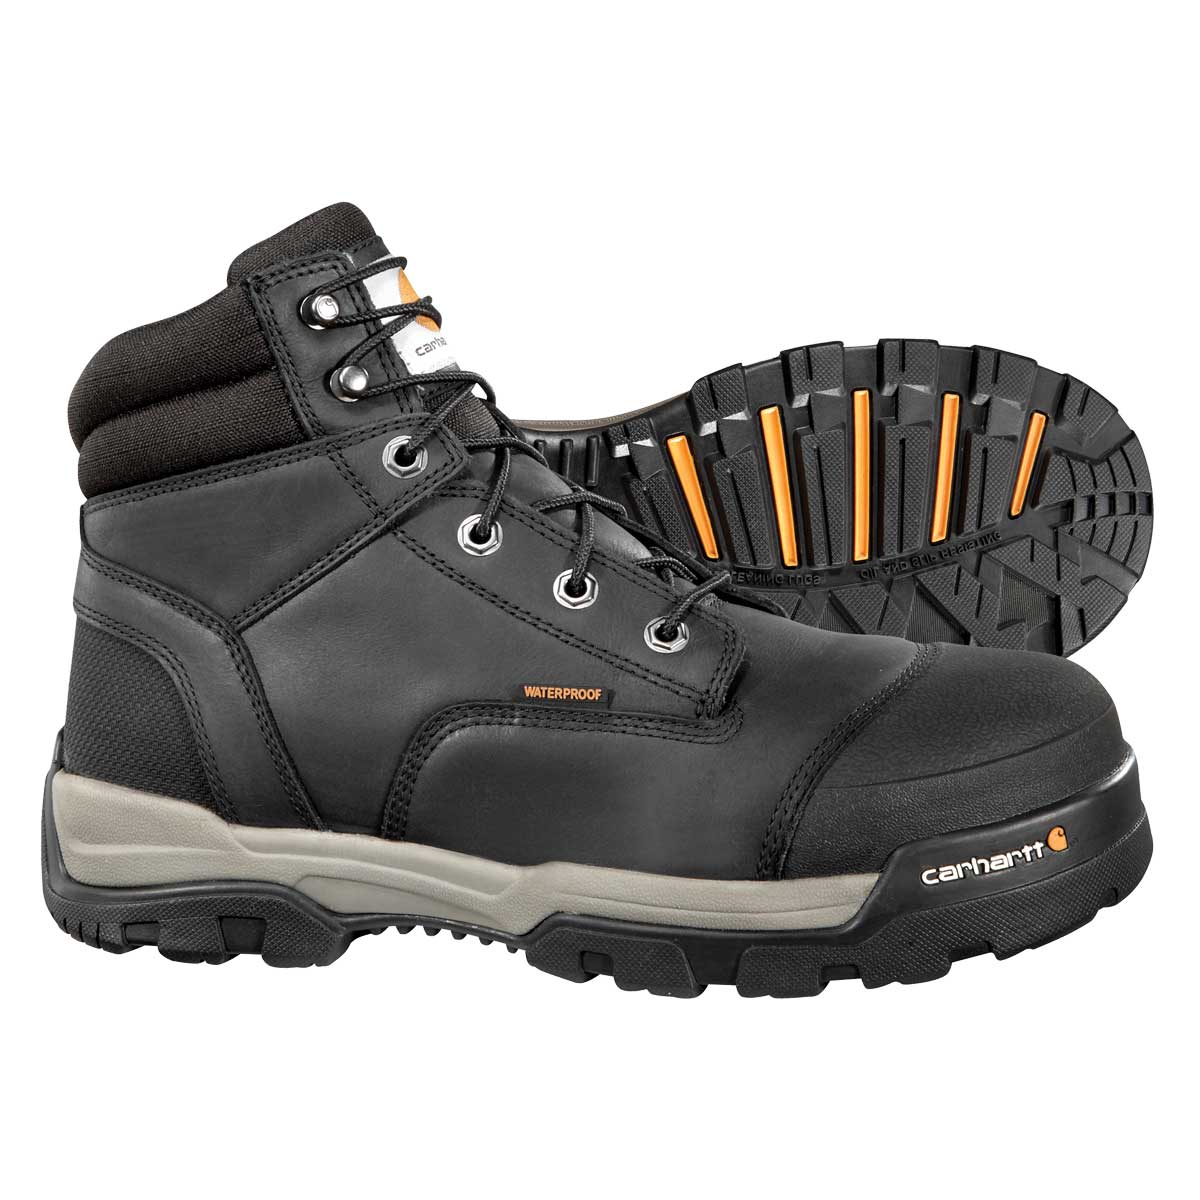 Carhartt Men's Ground Force 6" Composite Toe Work Boots - Black